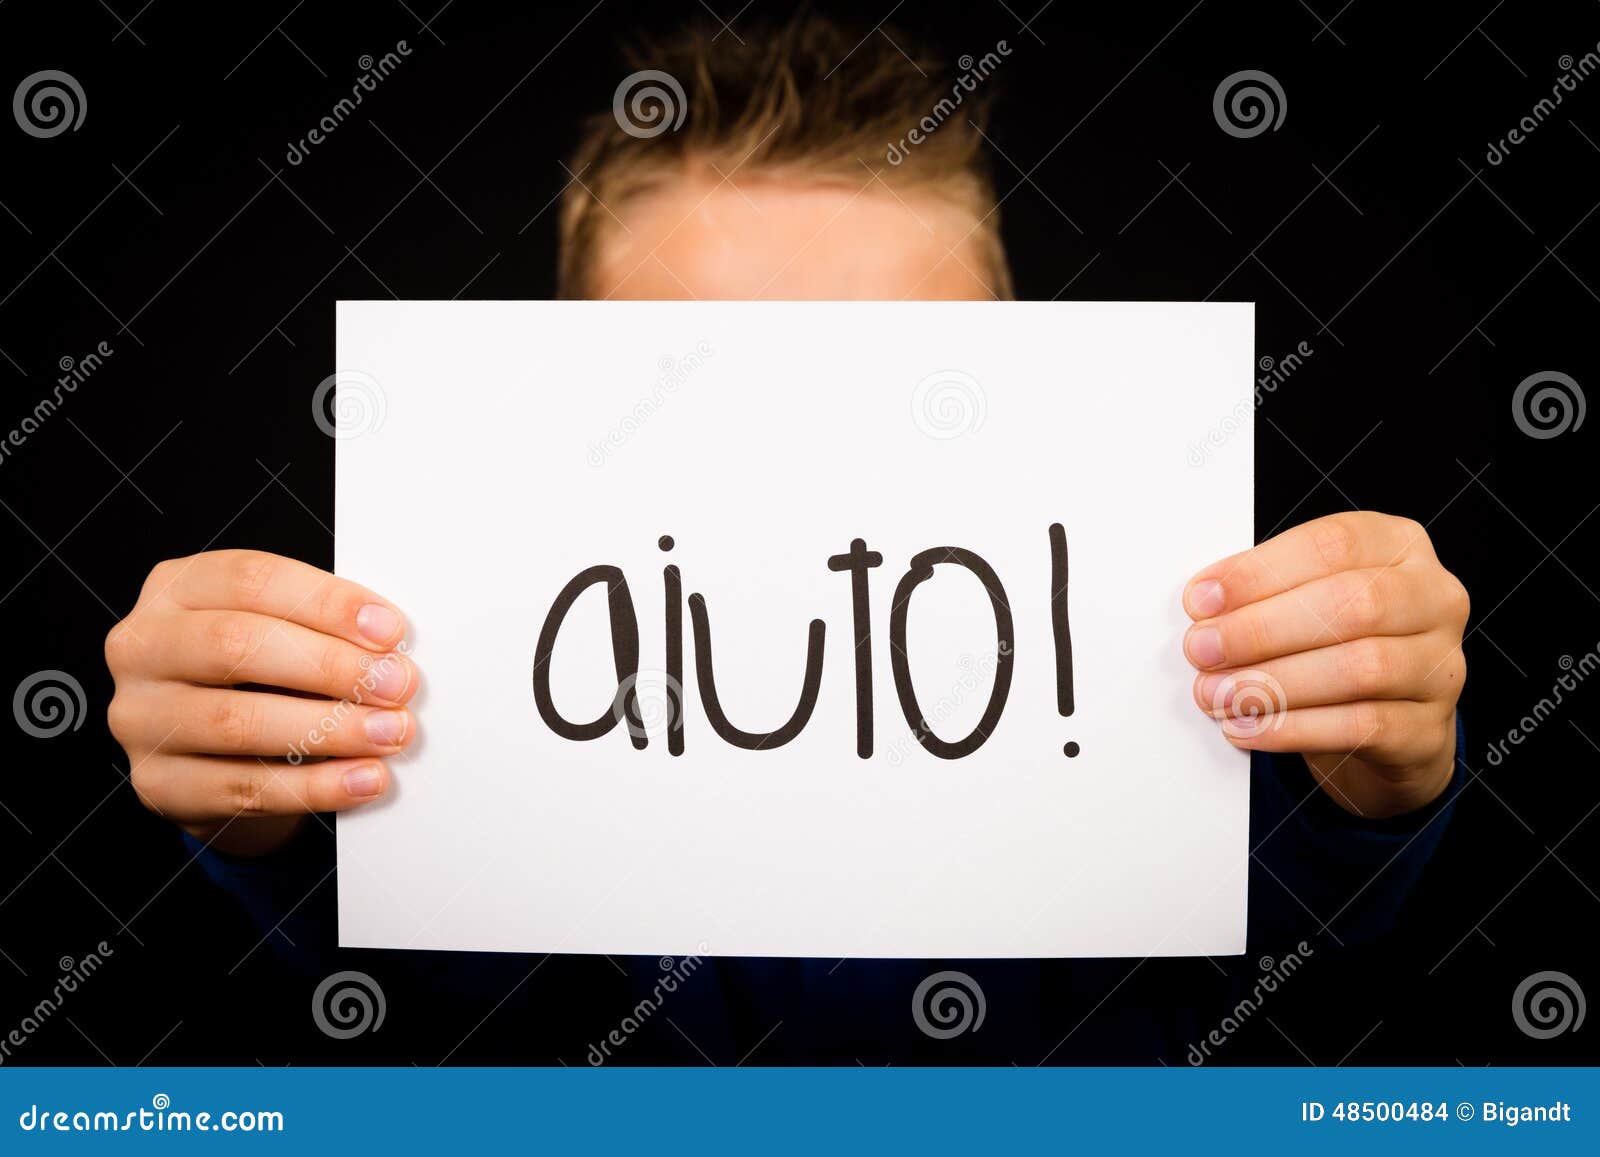 child holding sign with italian word aiuto - help